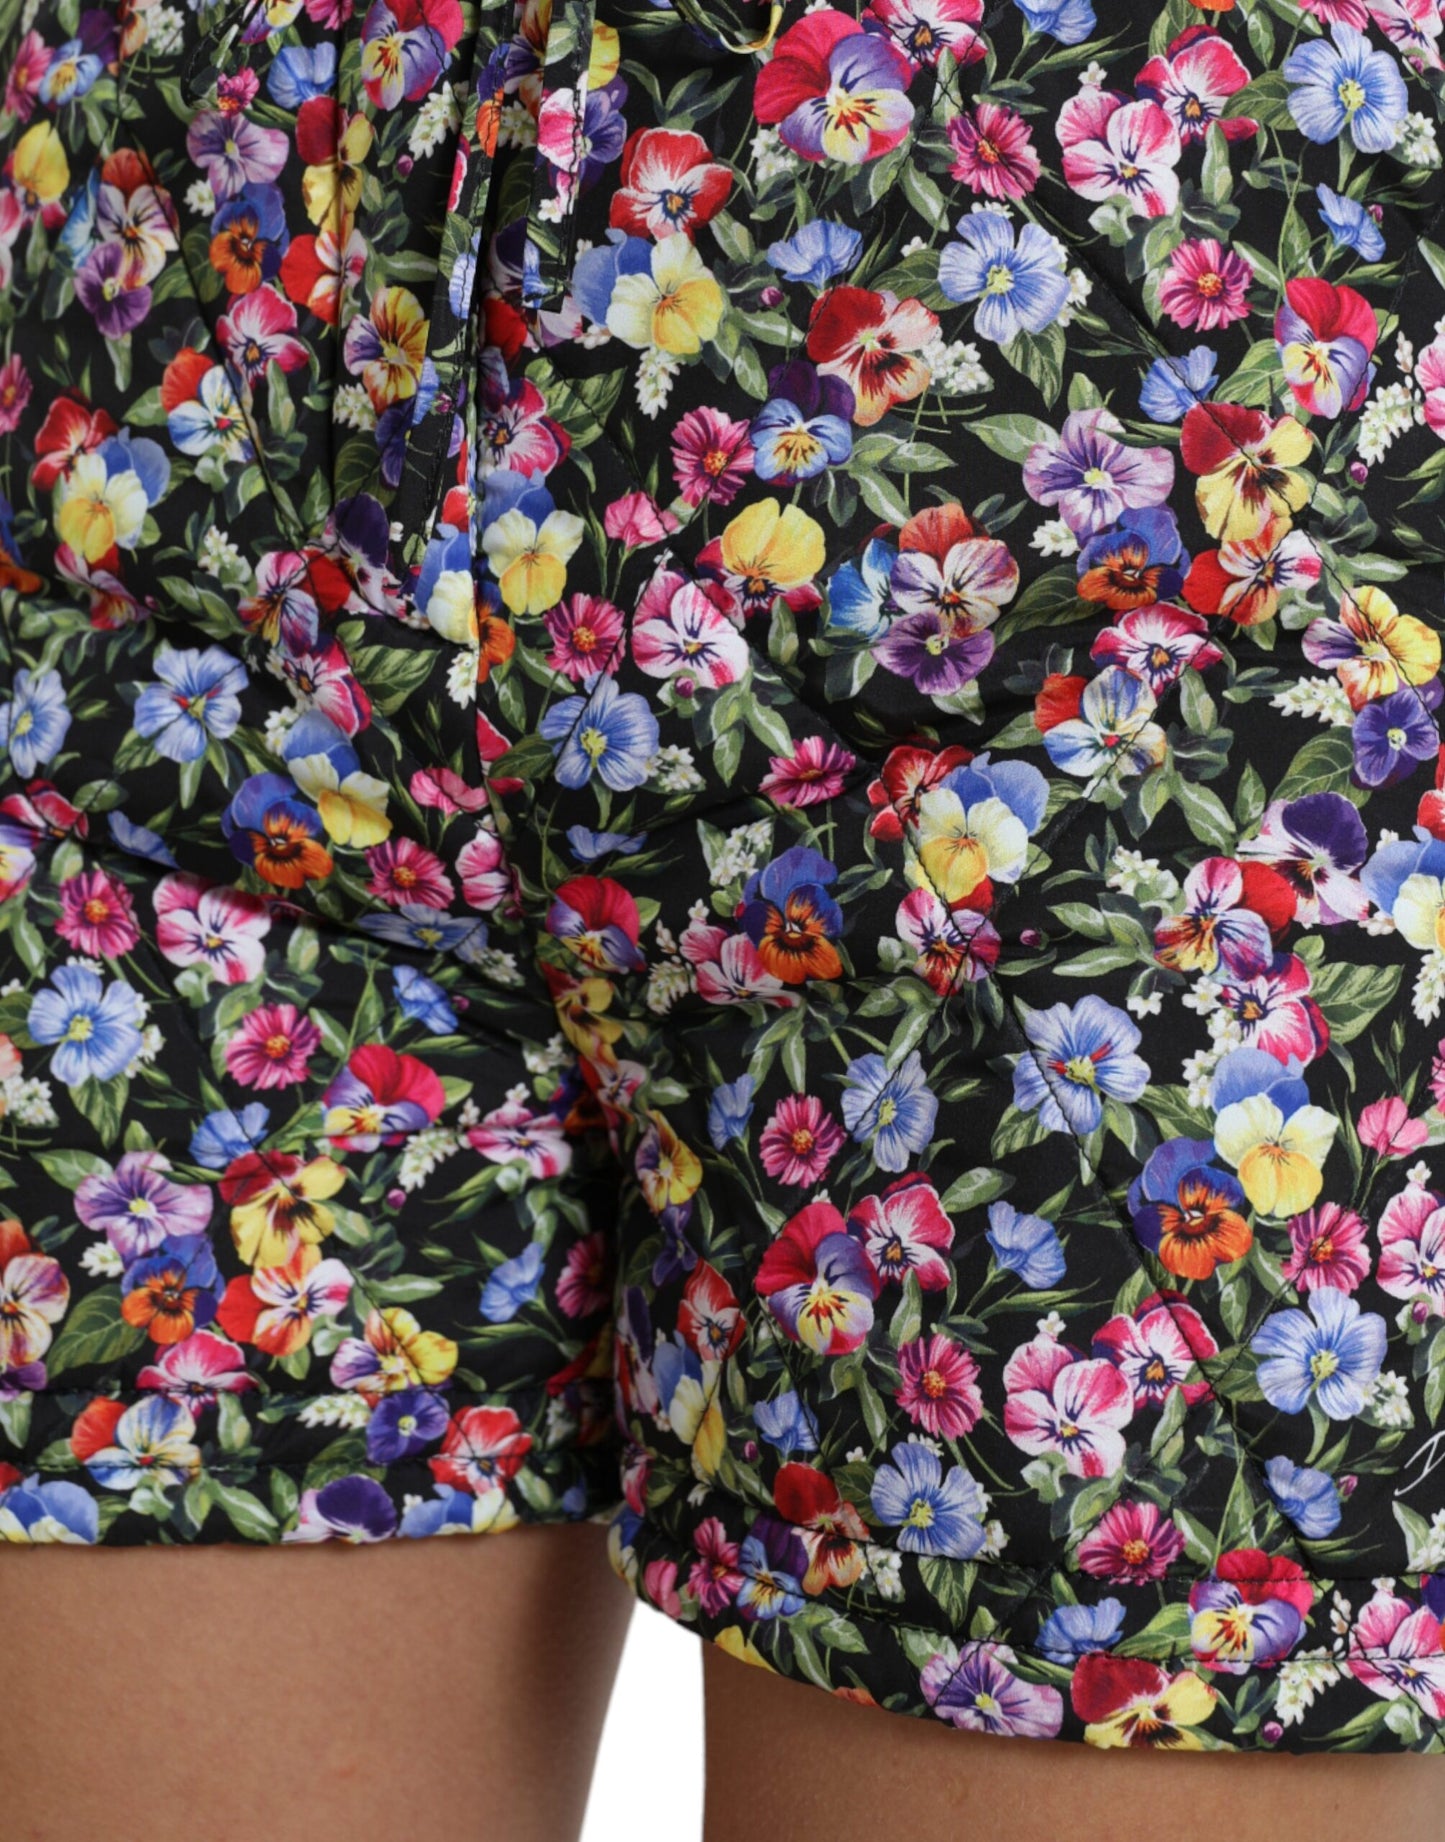 Dolce & Gabbana Vibrant High Waist Floral Shorts